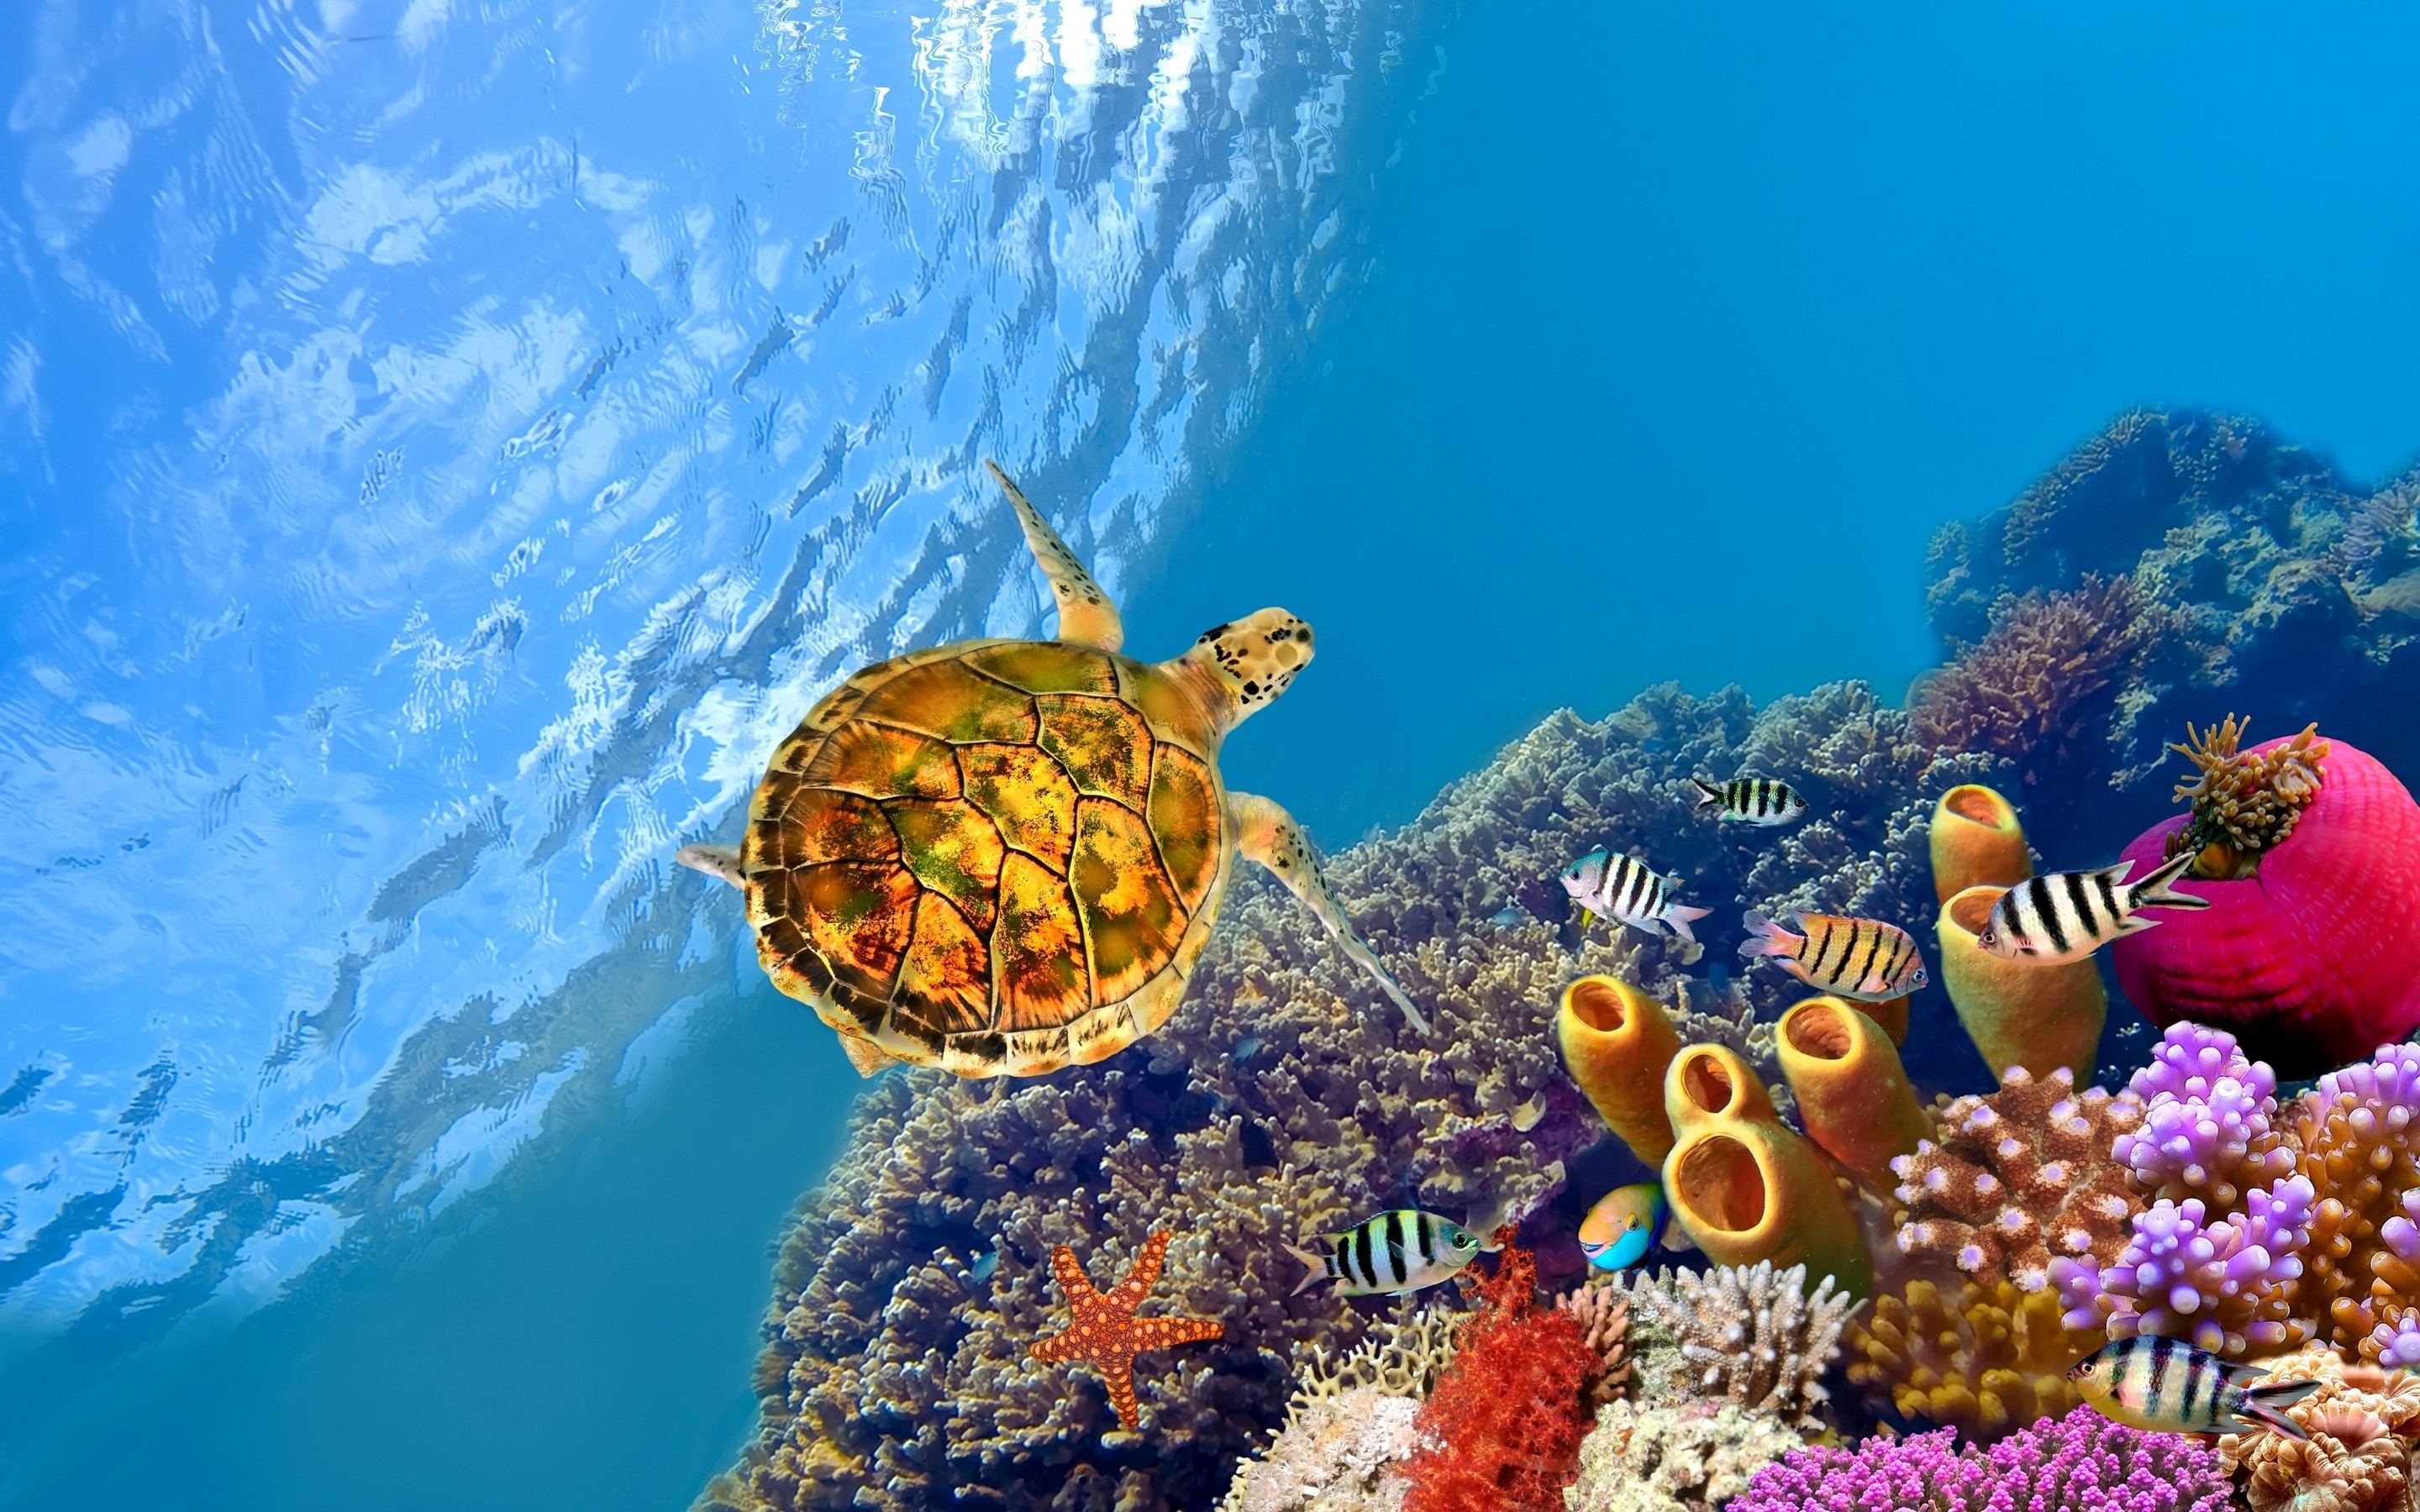 Turtle Underwater for 2880 x 1800 Retina Display resolution